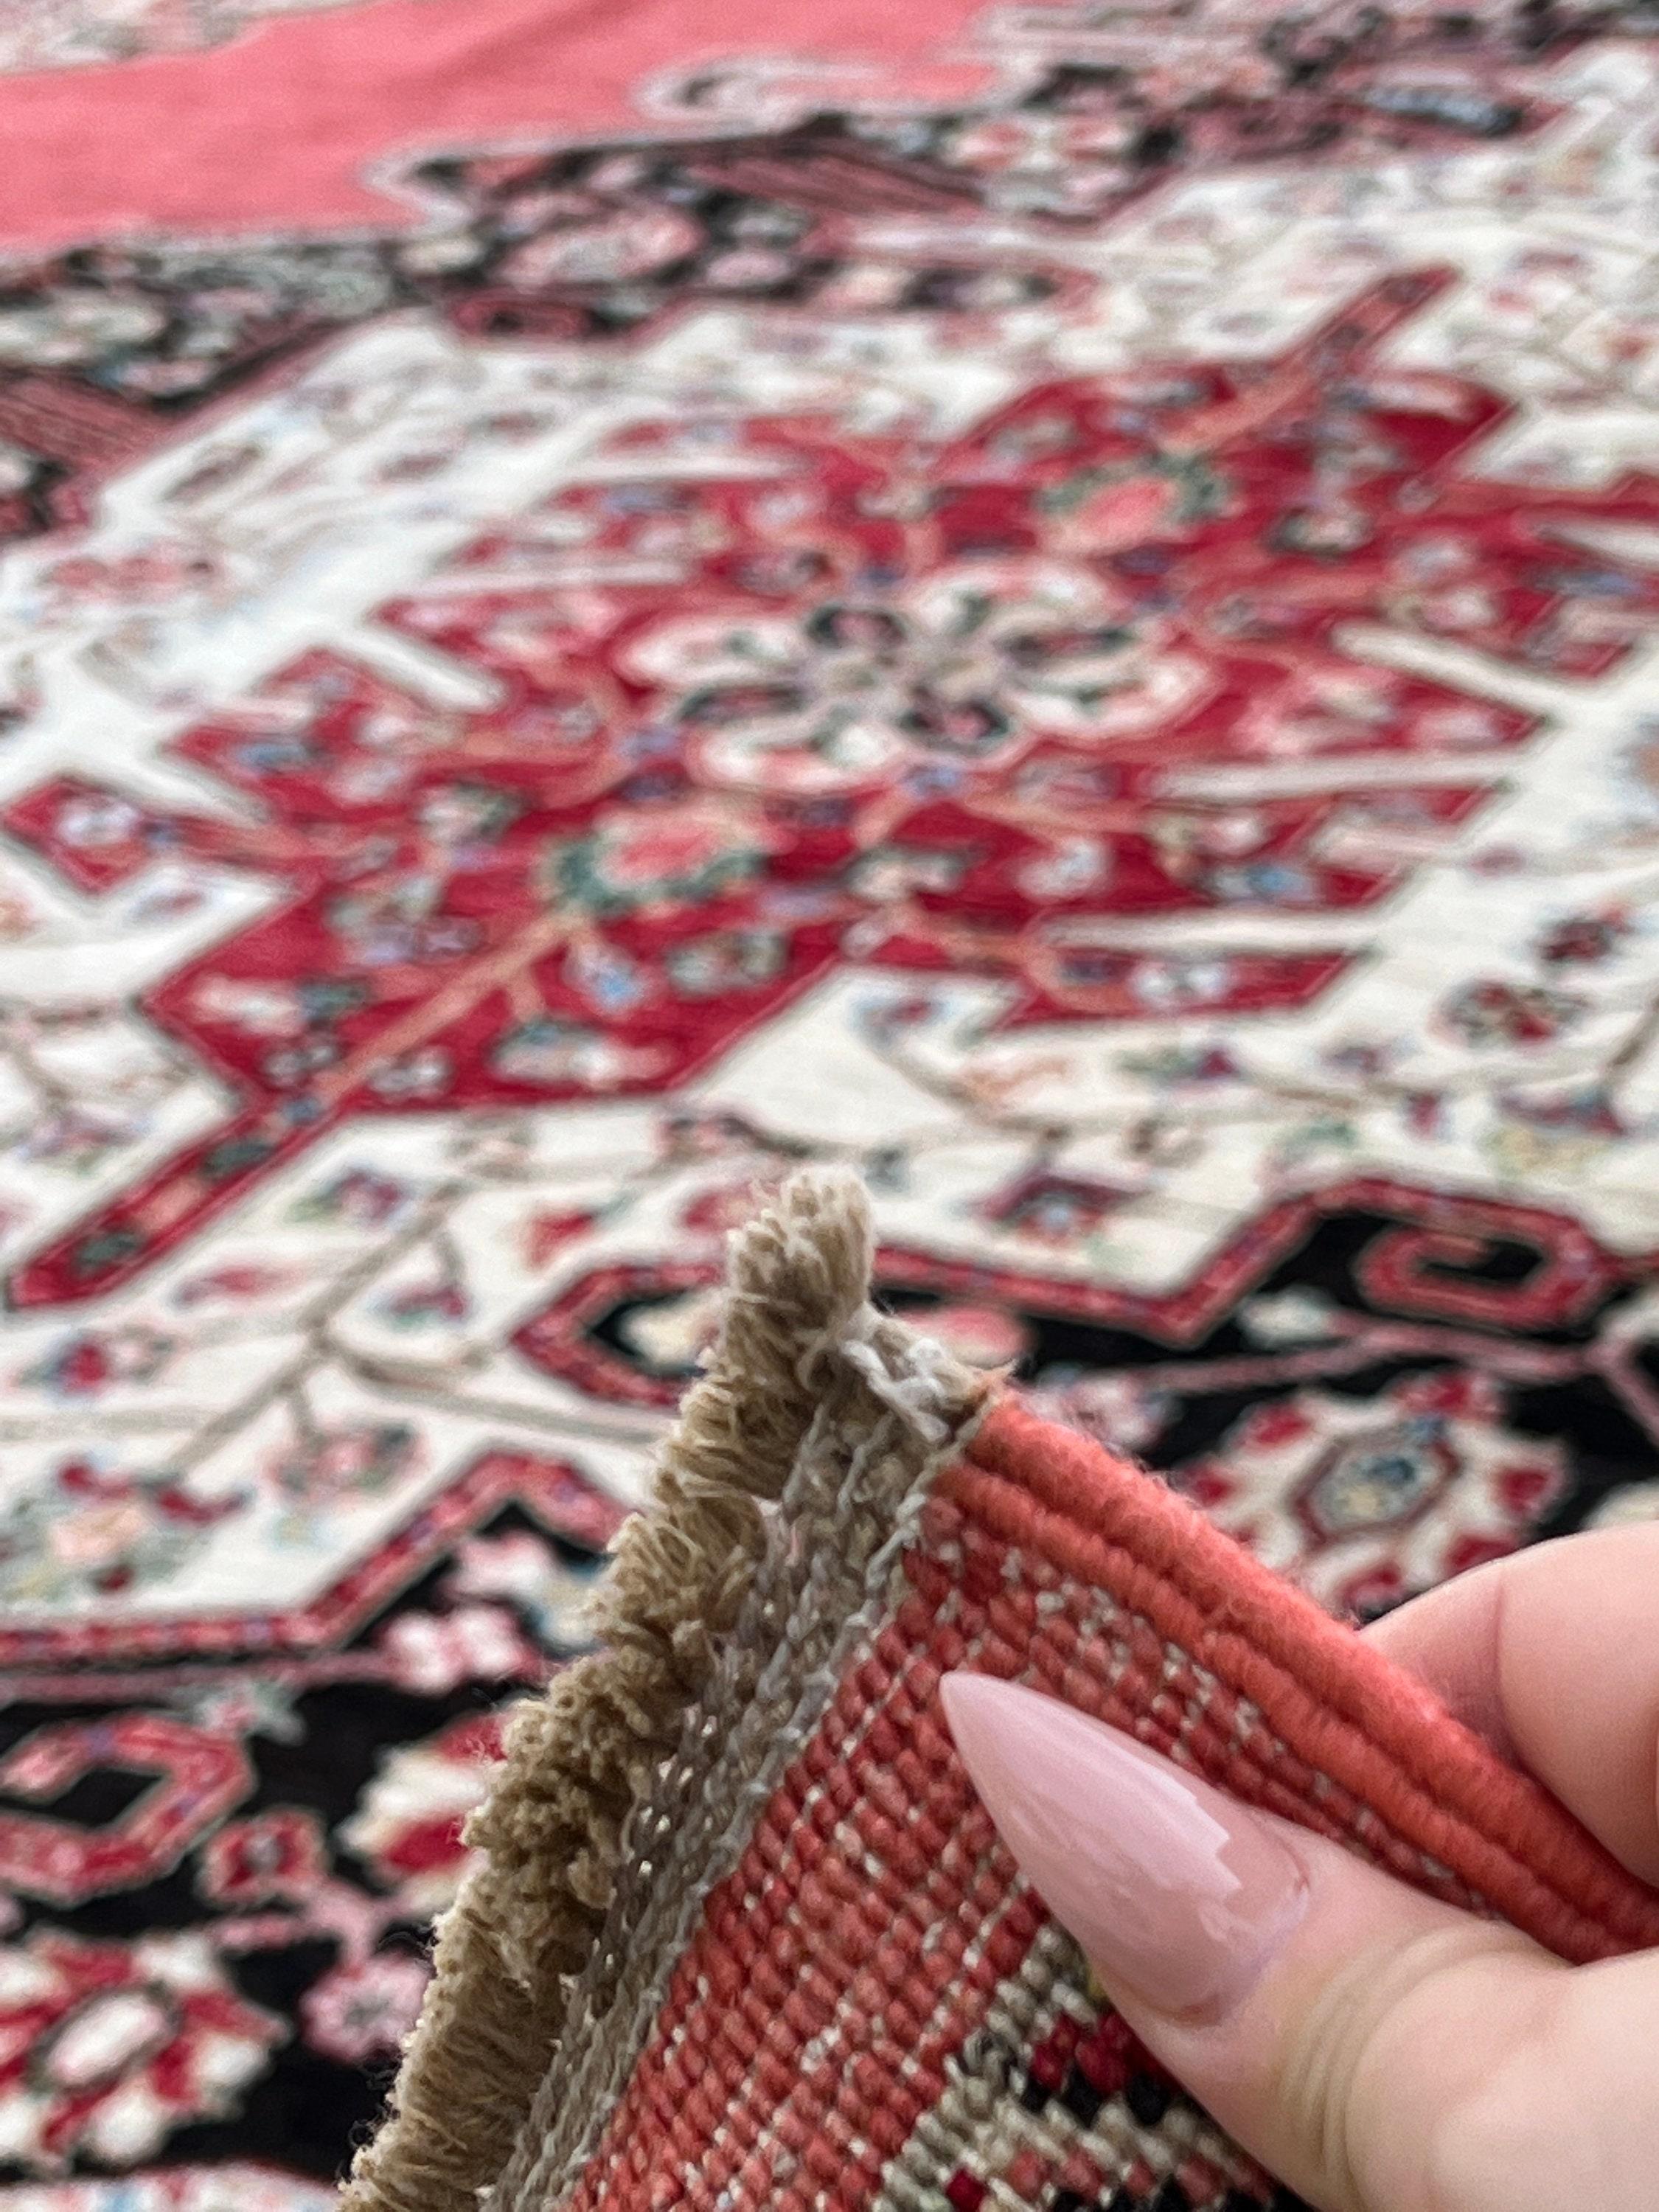 Hand-Knotted Afghan Rug Premium Hand-Spun Afghan Wool Fair Trade For Sale 4